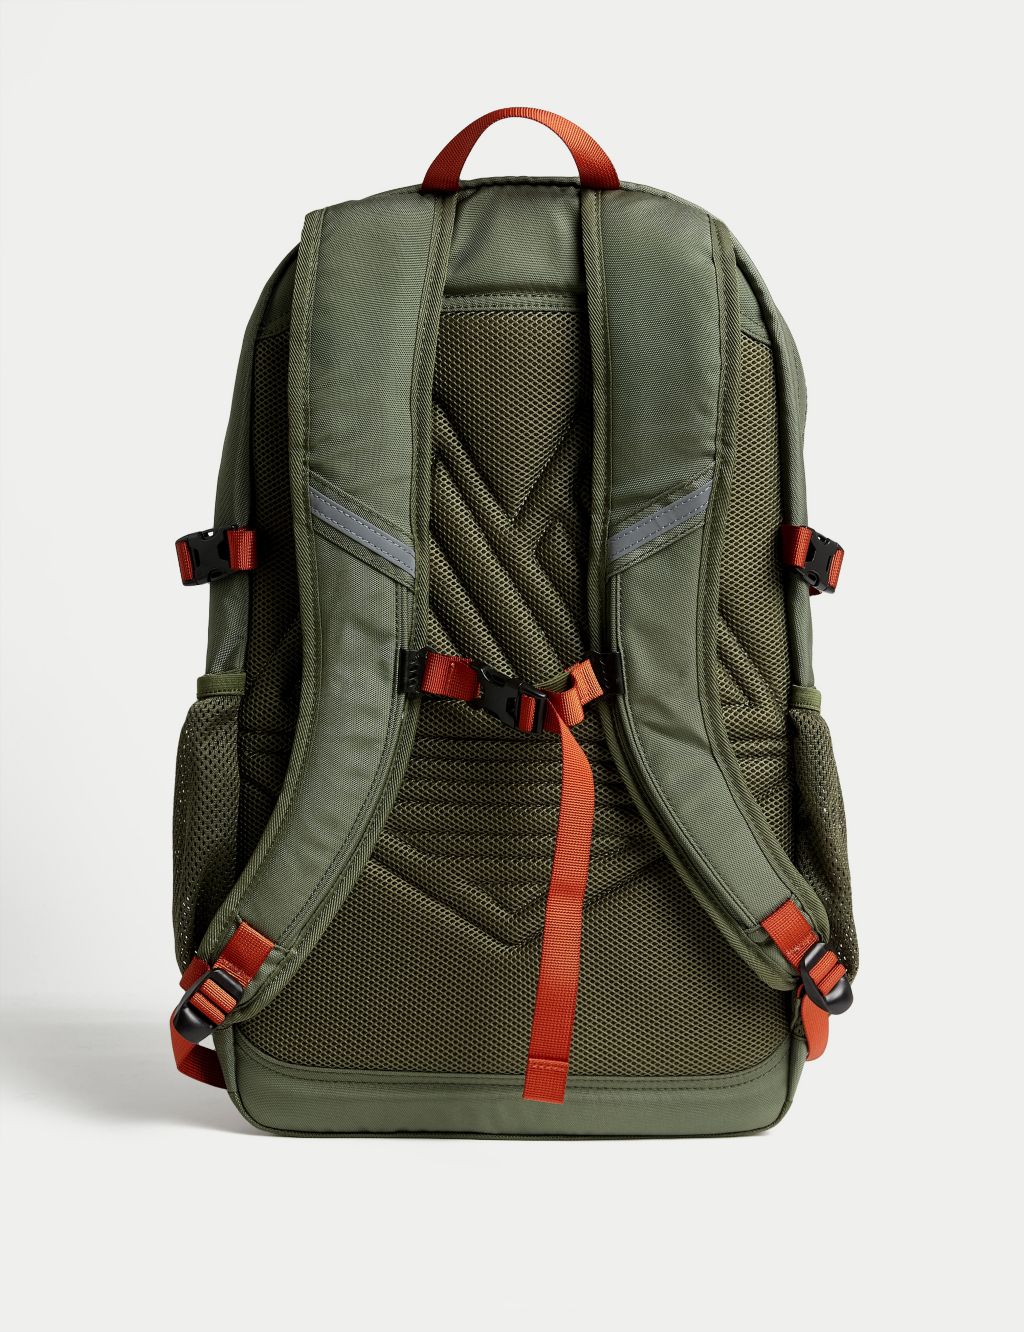 Backpack image 3